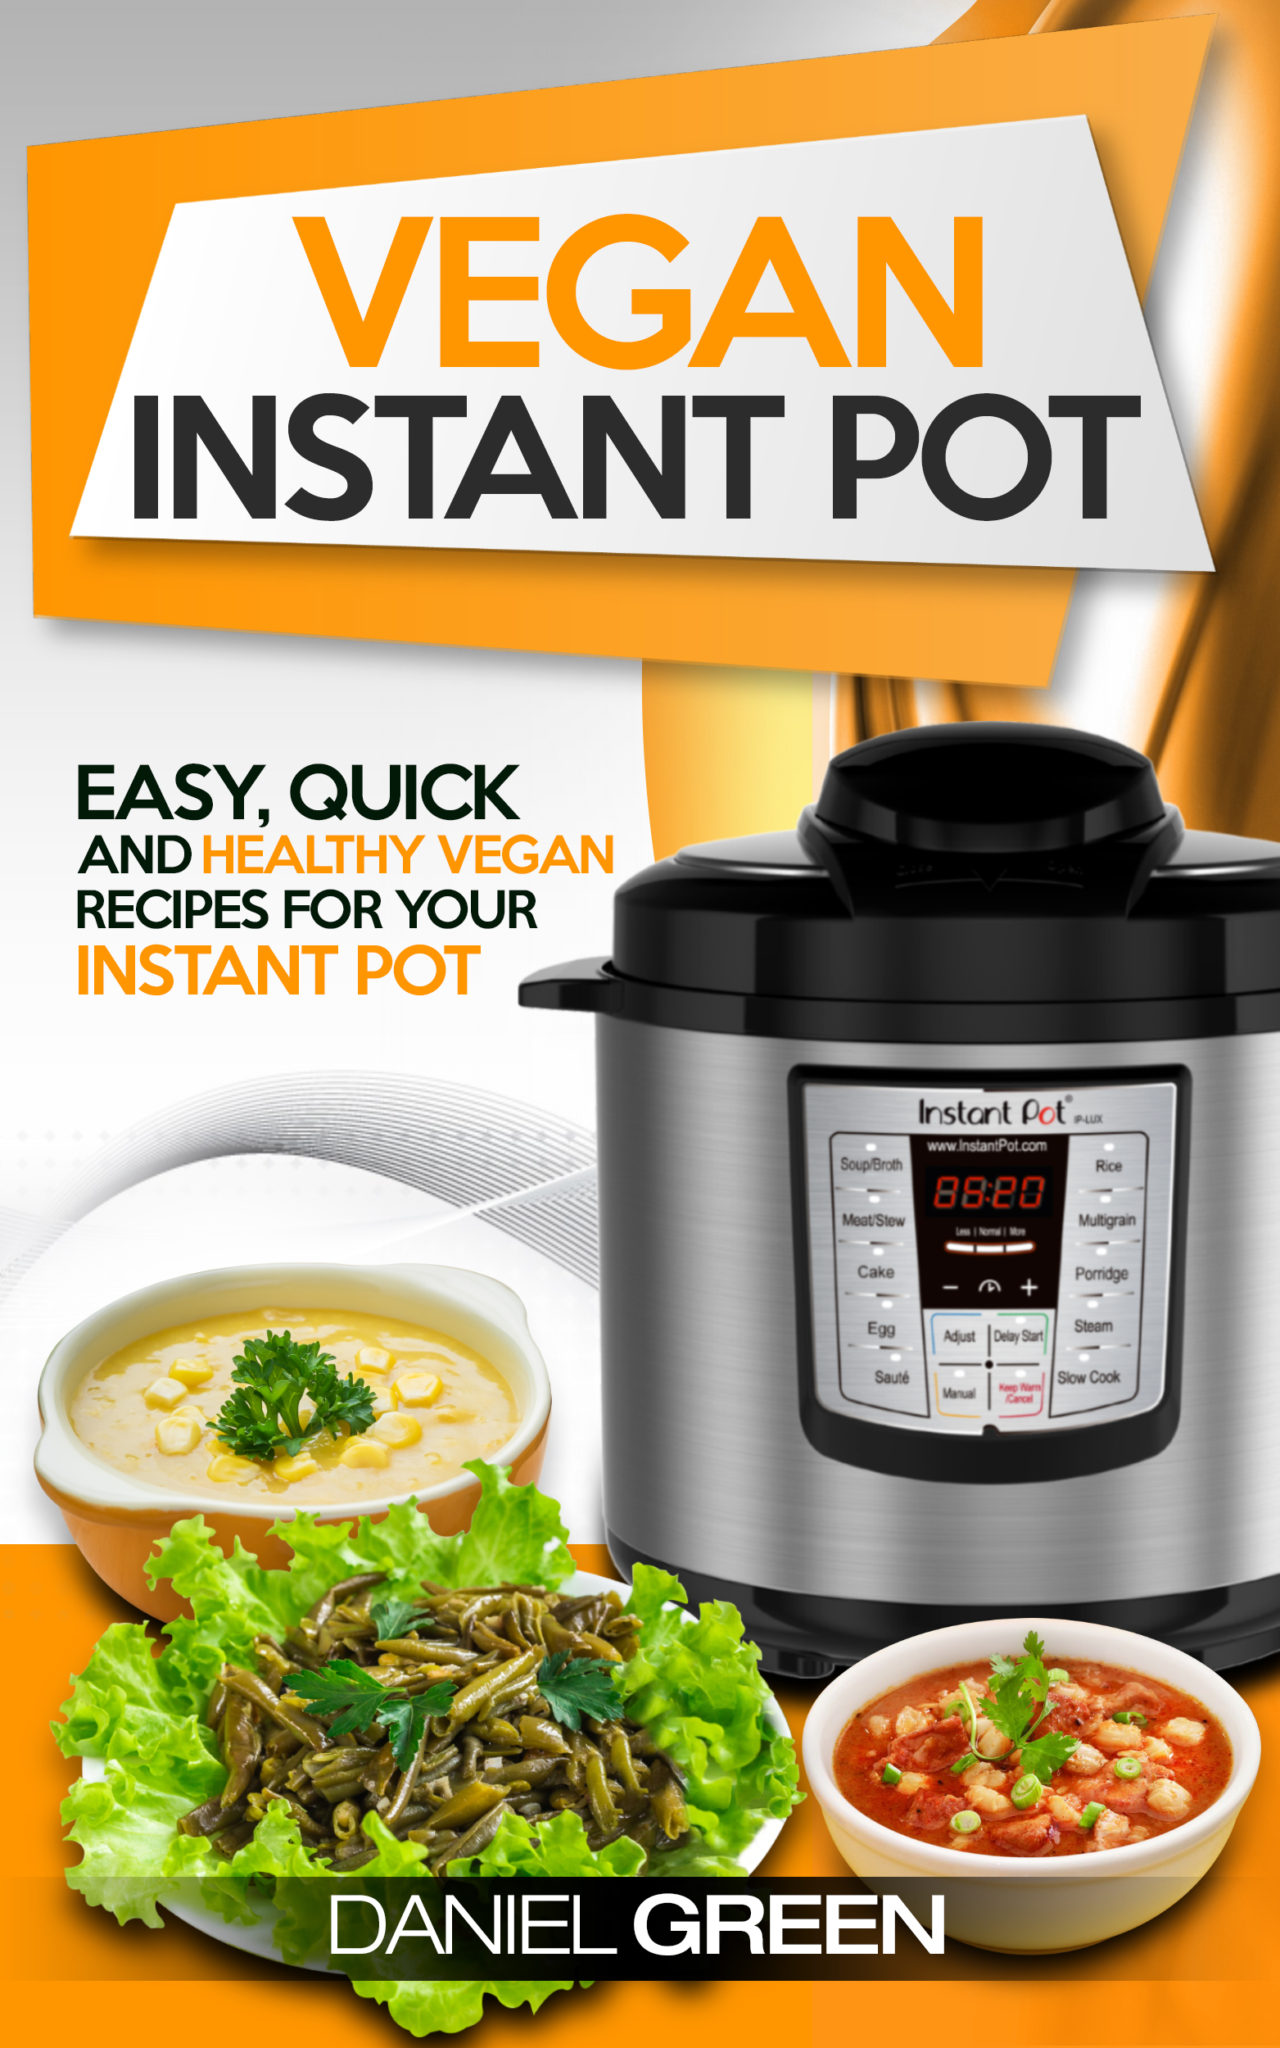 FREE: Vegan Instant Pot Cookbook by Daniel Green